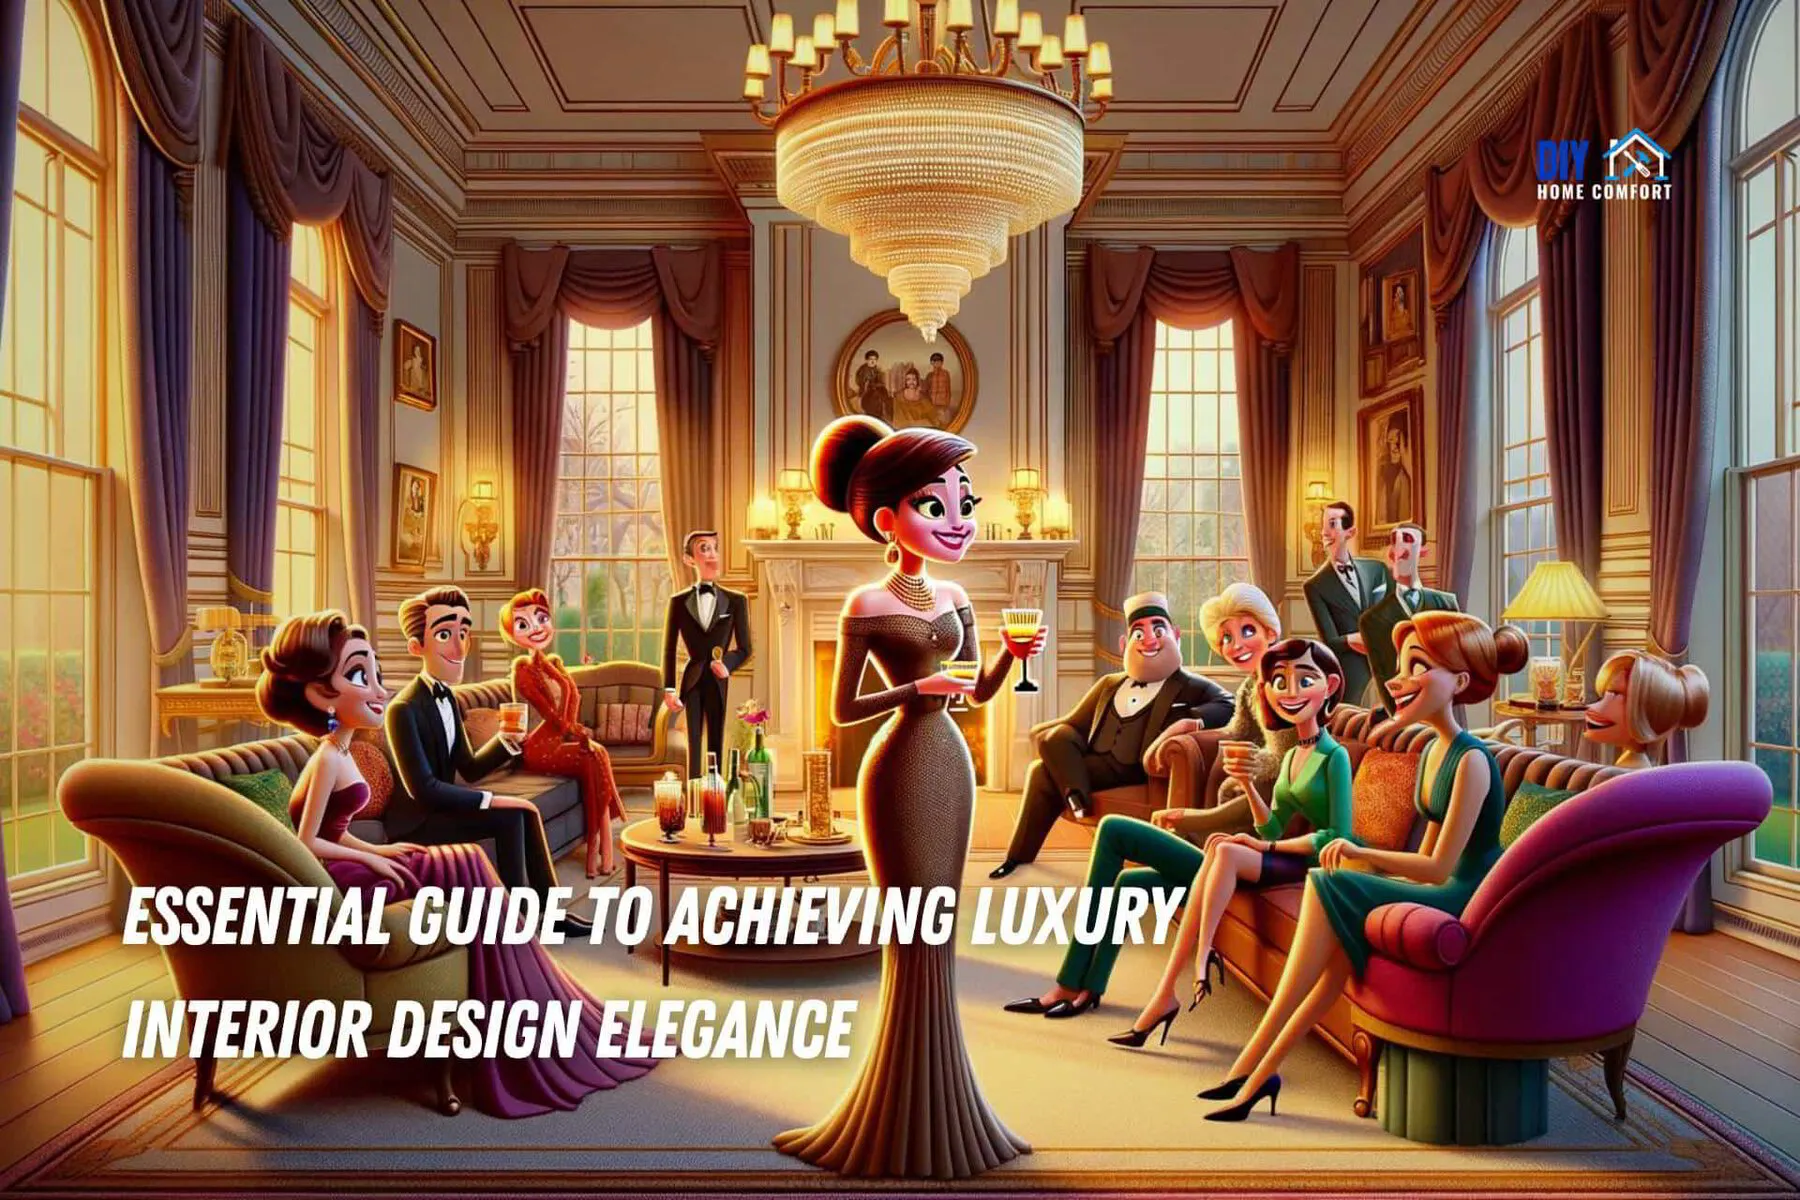 Transform Your Space: Essential Guide to Achieving Luxury Interior Design Elegance | DIY Home Comfort